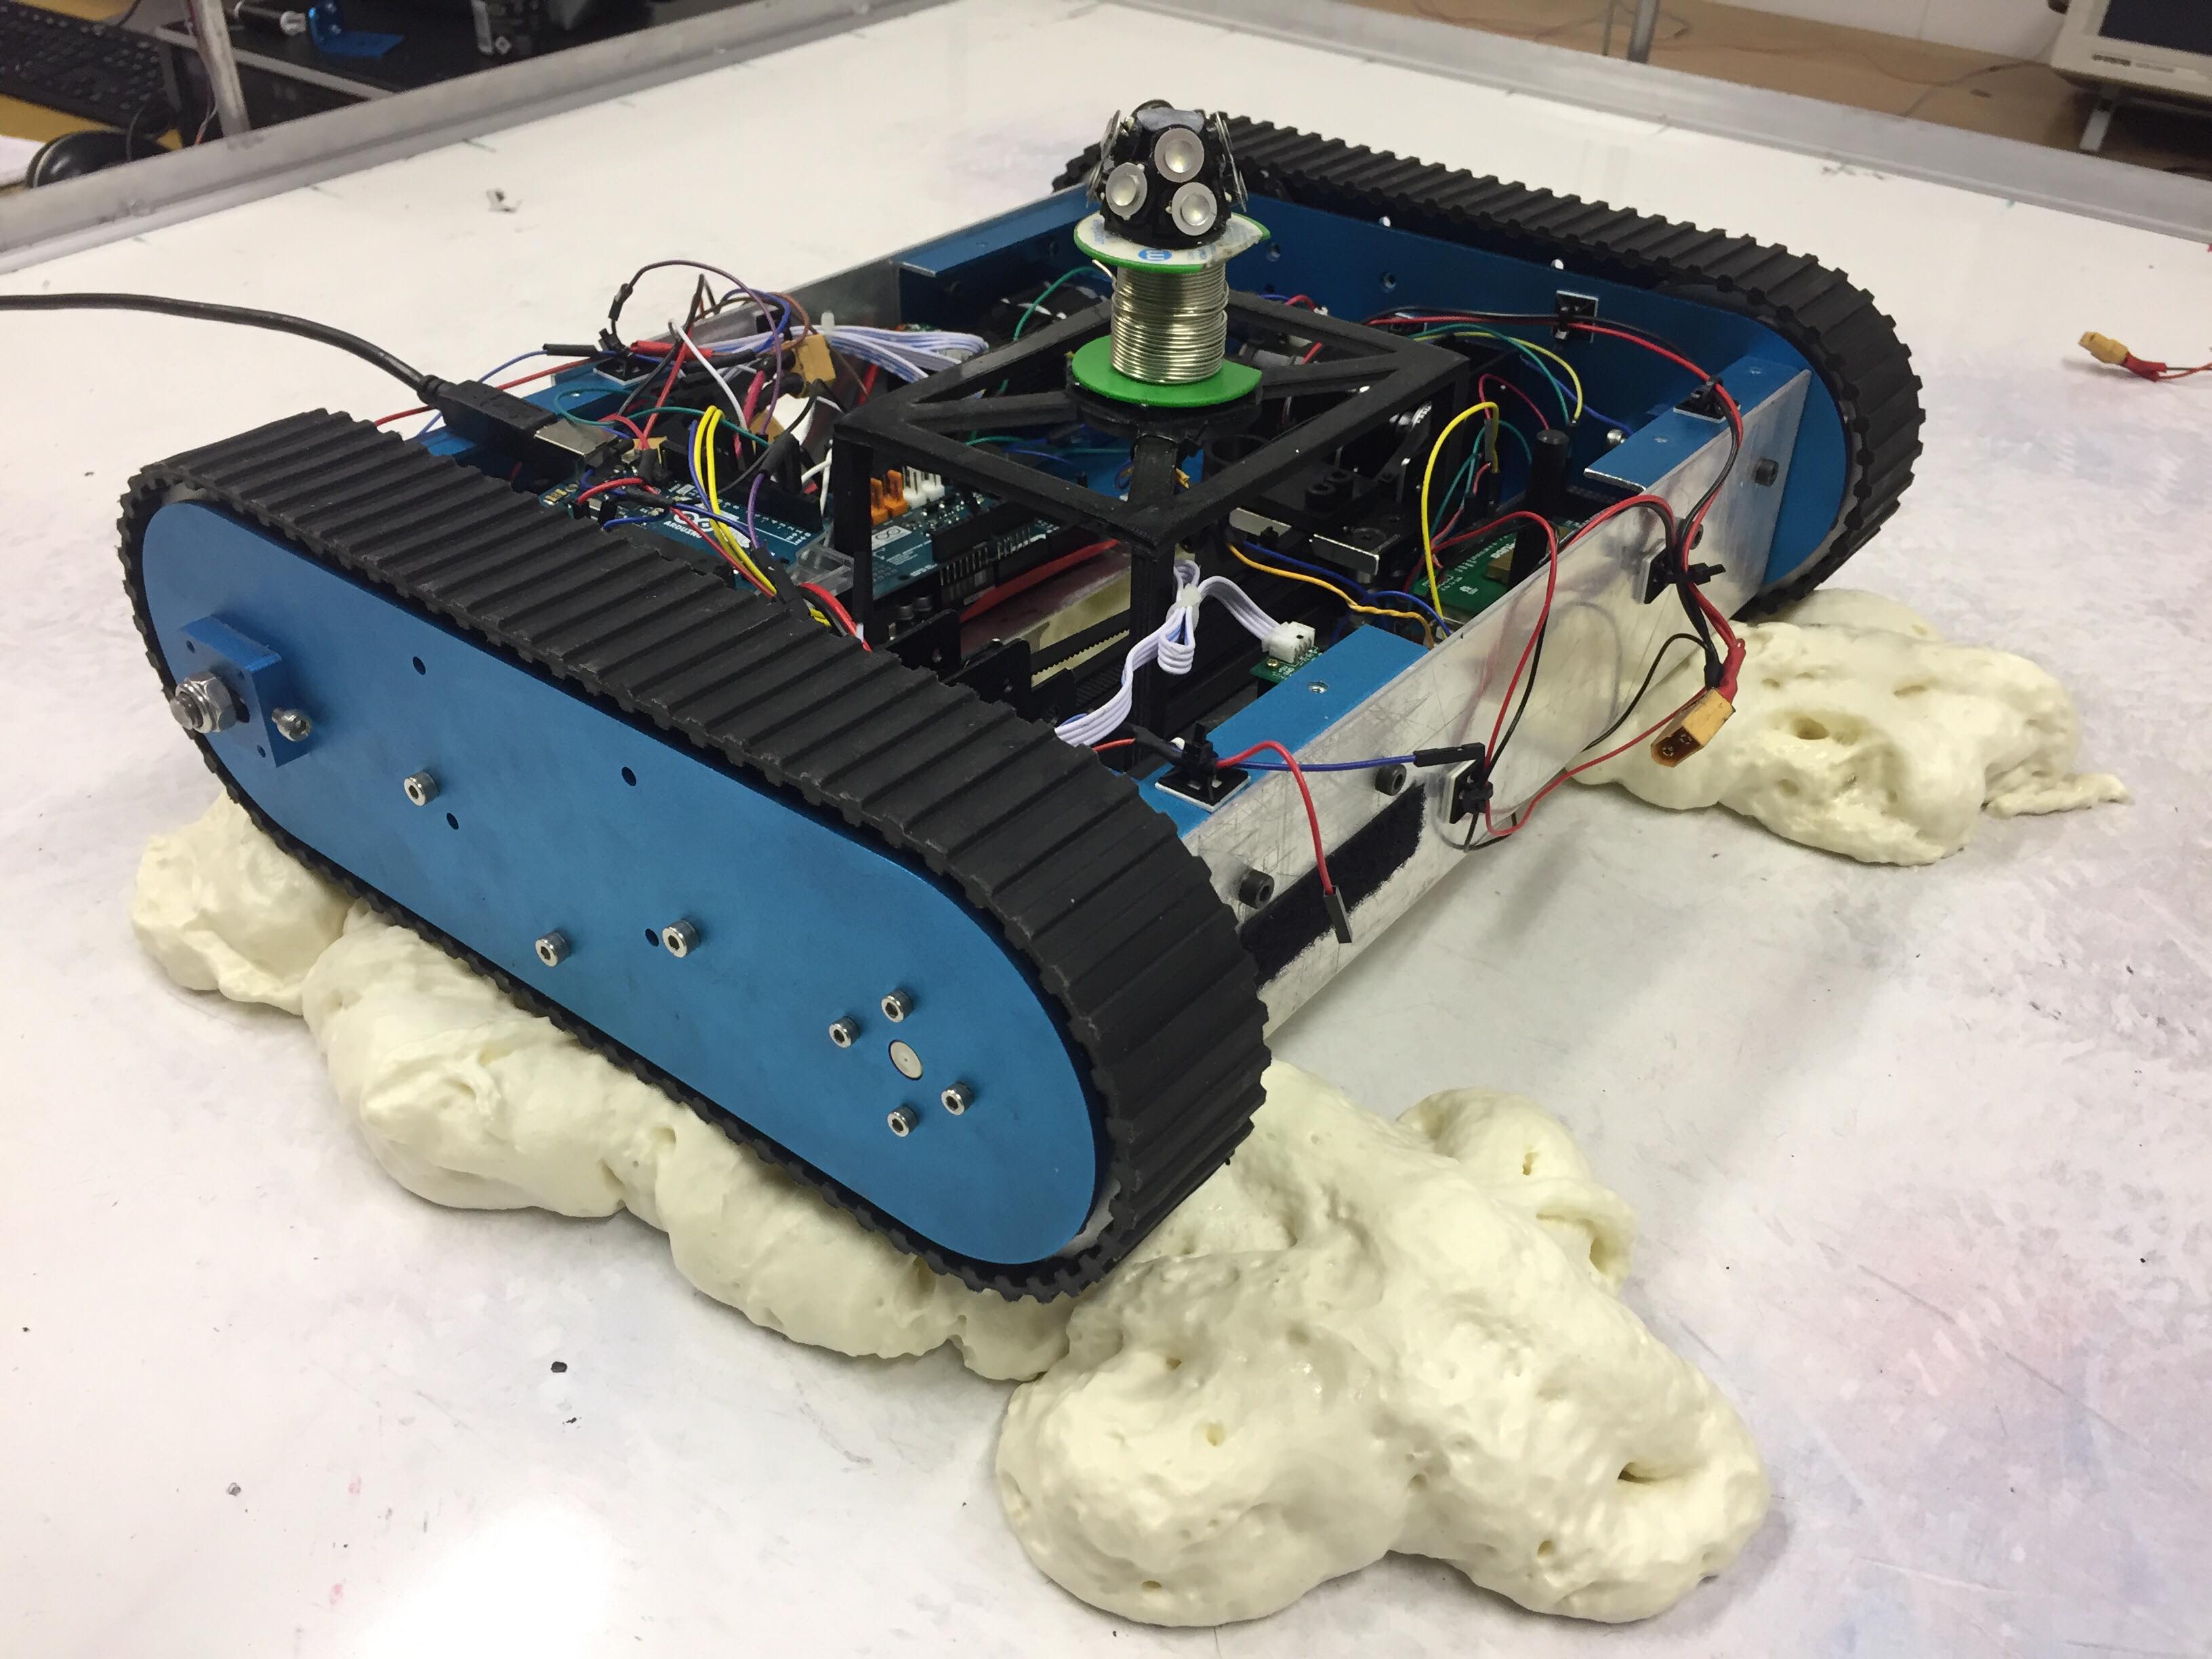 An autonomous 3D printing platform